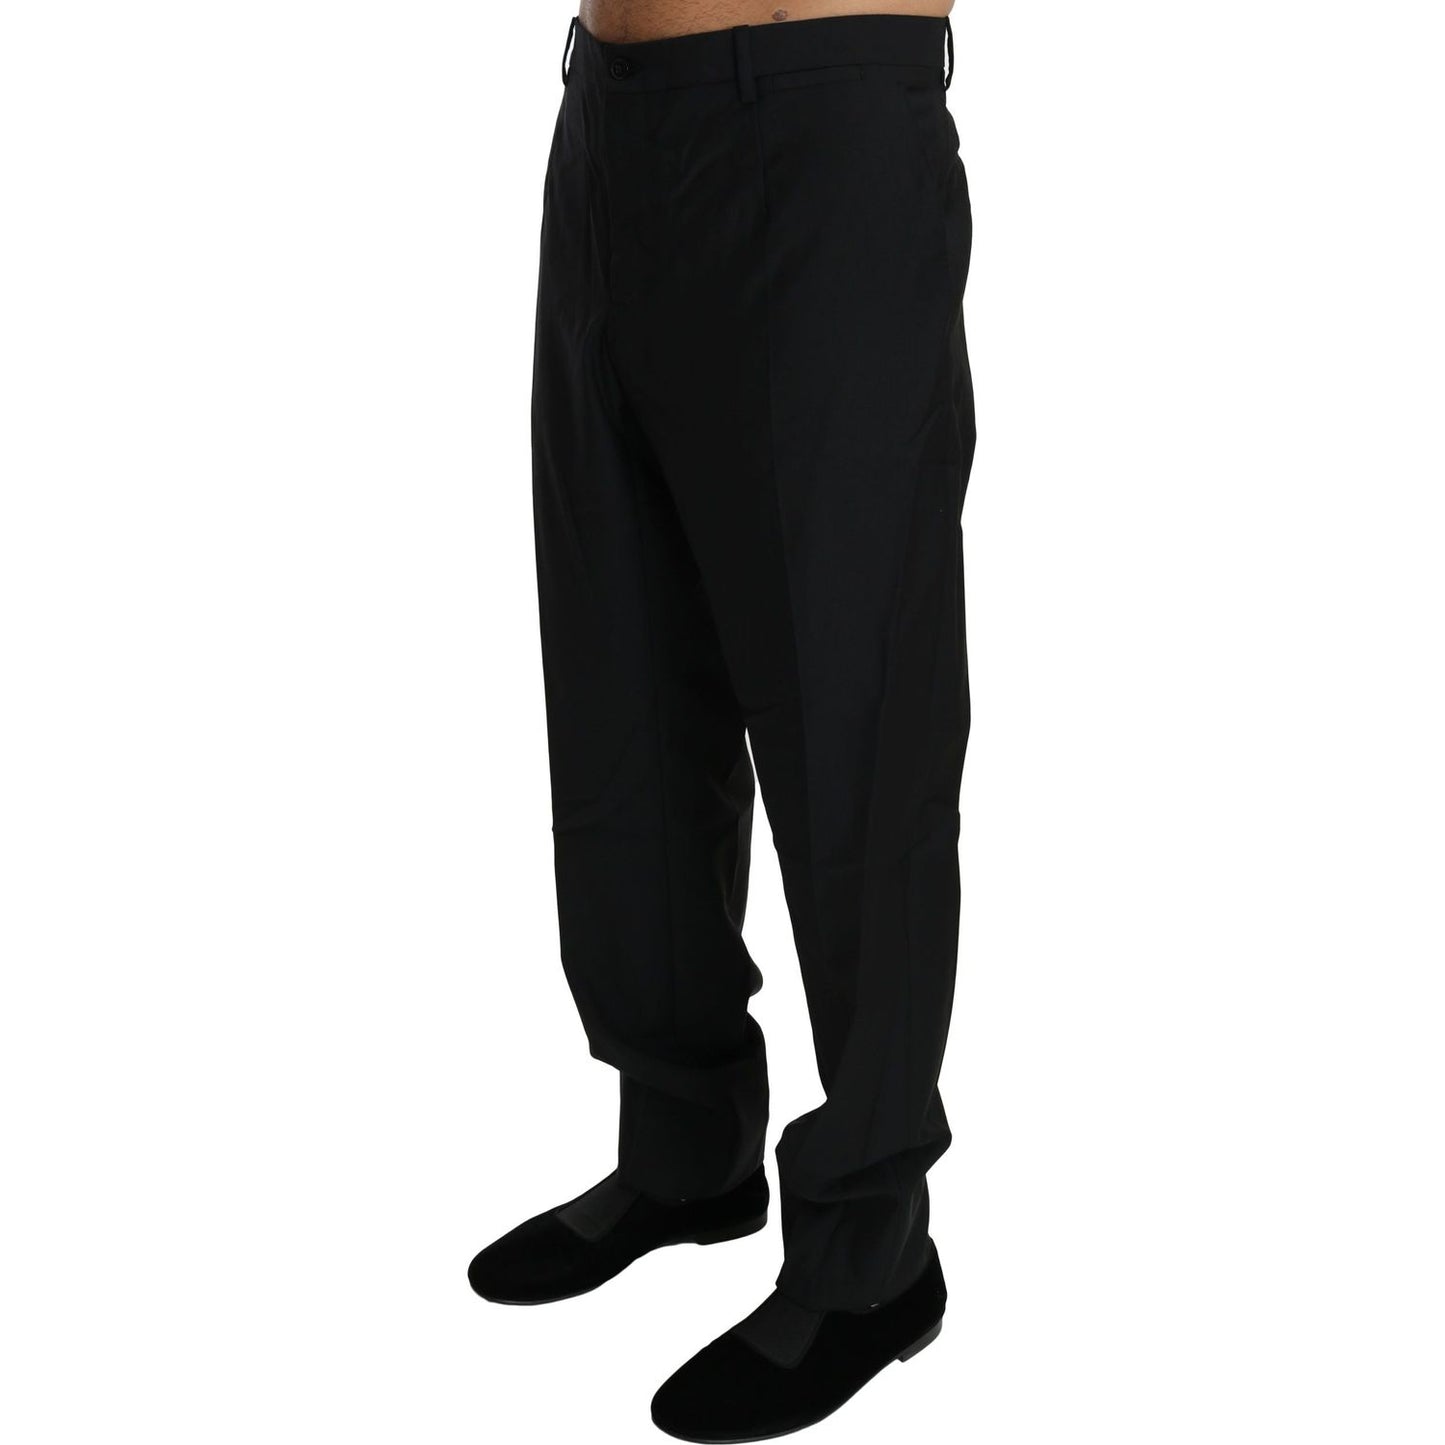 Dolce & Gabbana Elegant Black Virgin Wool Dress Pants black-dress-formal-trouser-men-wool-pants Jeans & Pants IMG_1229-1-scaled-d77f6fa9-449.jpg